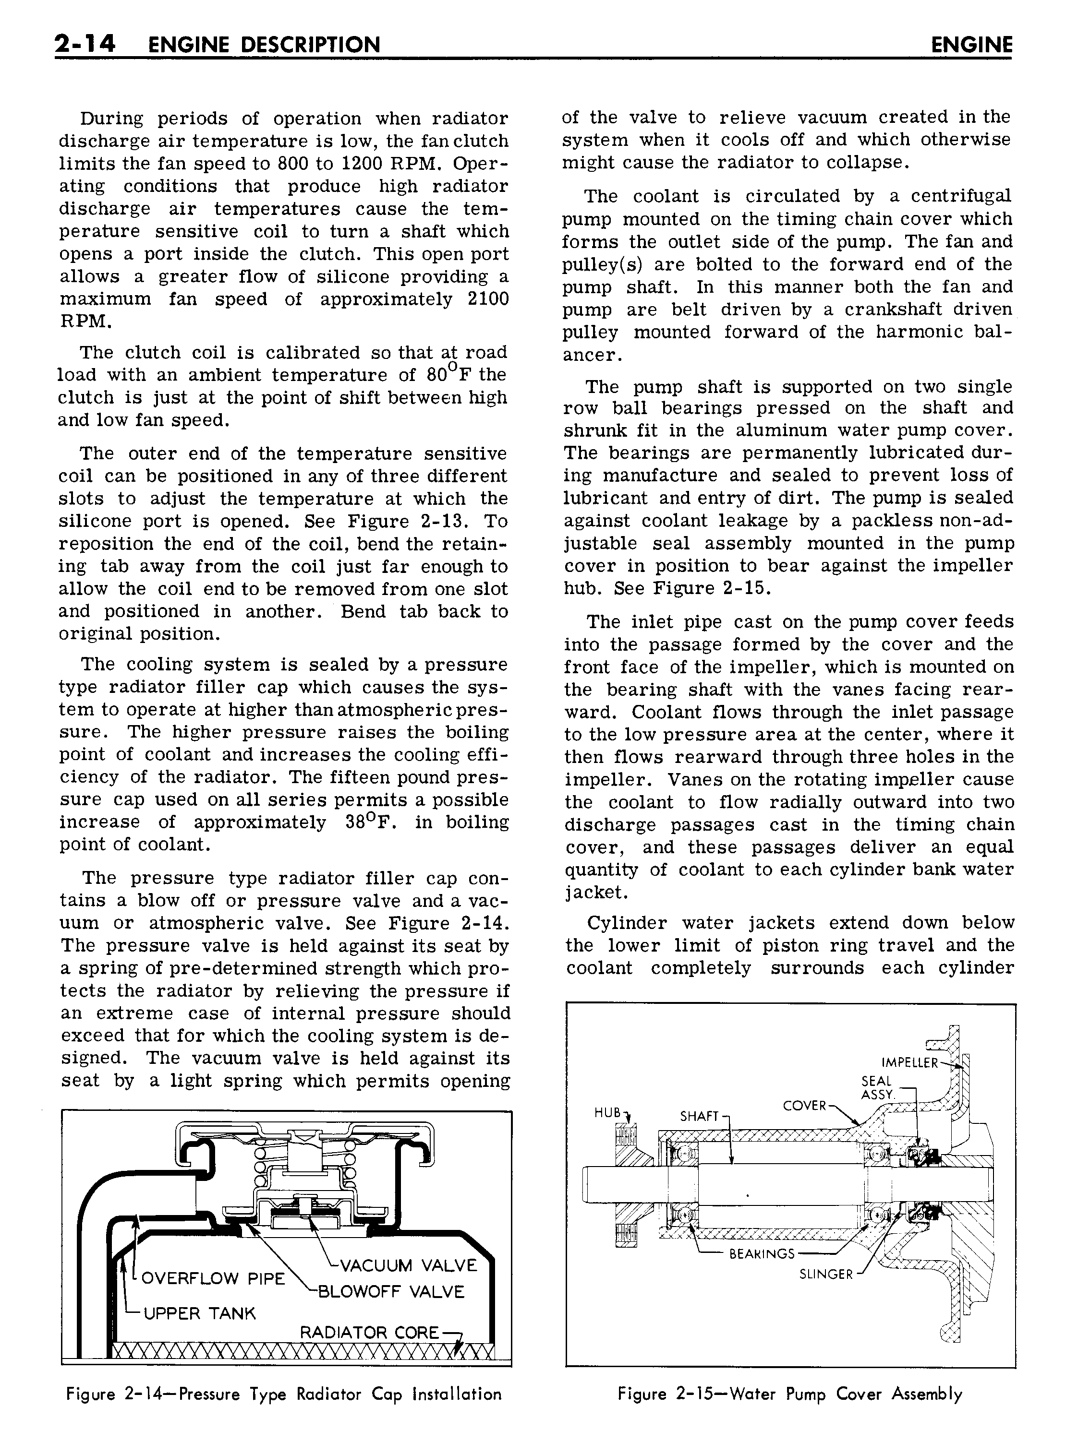 n_03 1961 Buick Shop Manual - Engine-014-014.jpg